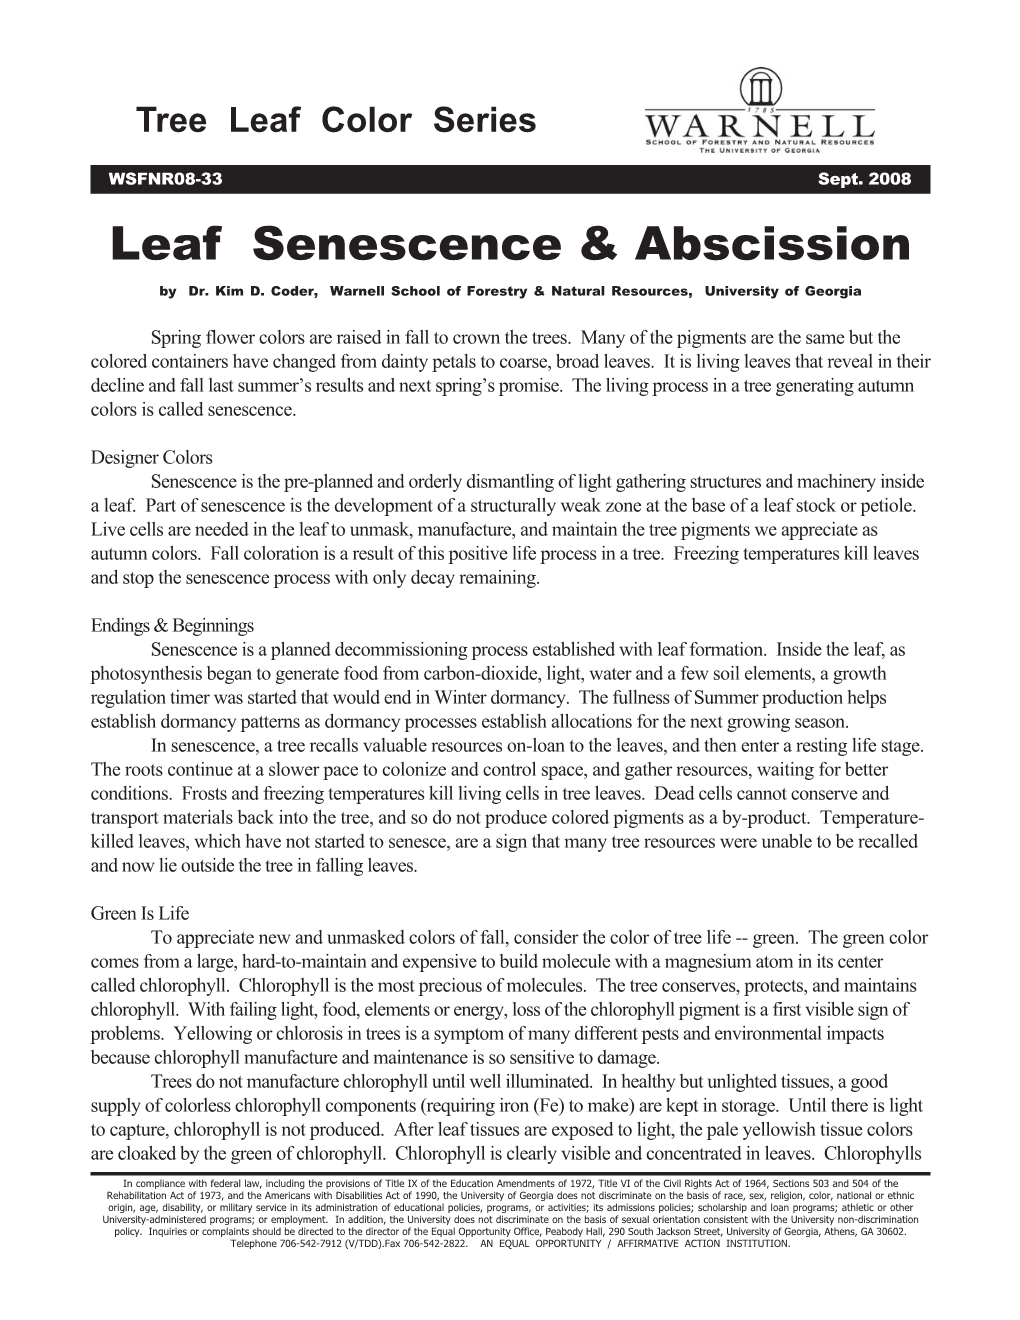 Leaf Senescence & Abscission Pub 08-33.Pdf